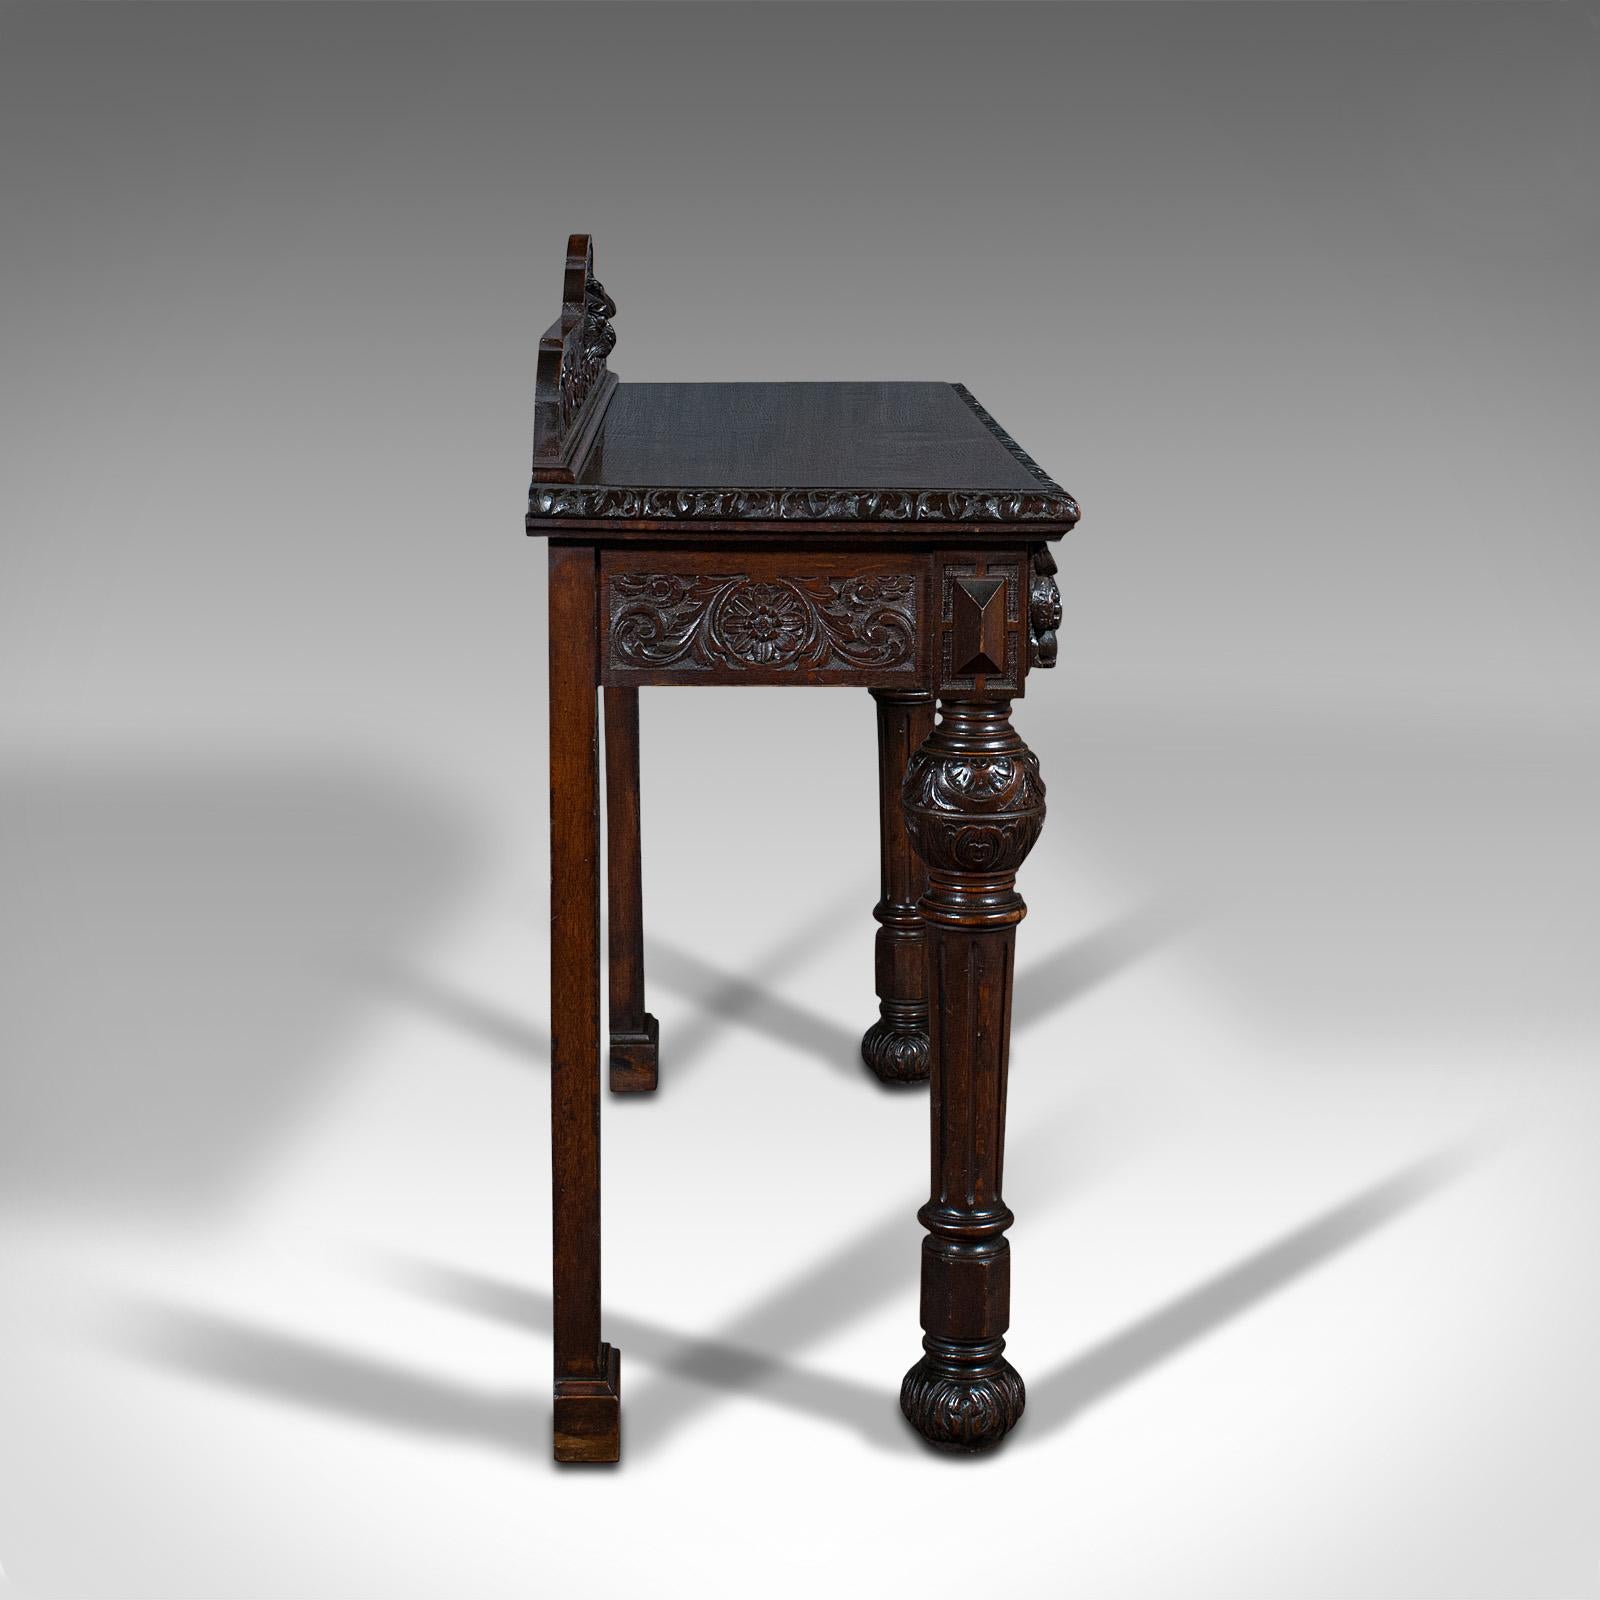 British Antique Side Table, Scottish, Oak Console, Desk, Gothic Taste, Victorian, C.1880